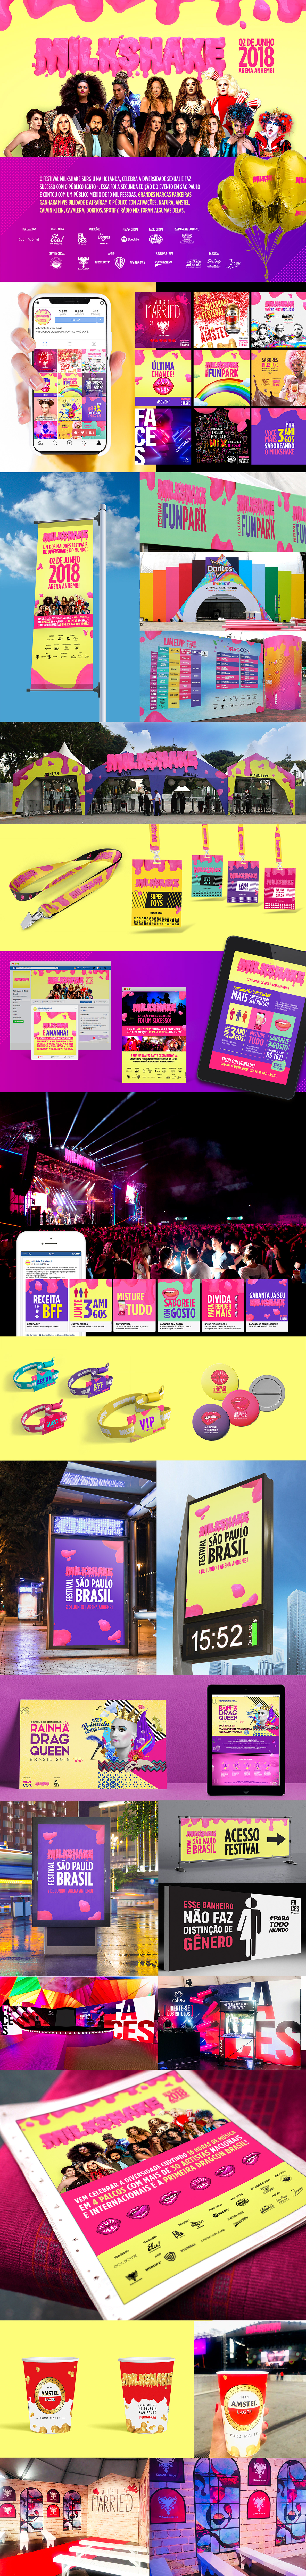 festival LGBTQ+ milkshake Parada Gay brand experience ativação patrocinio apoio arena anhembi live marketing